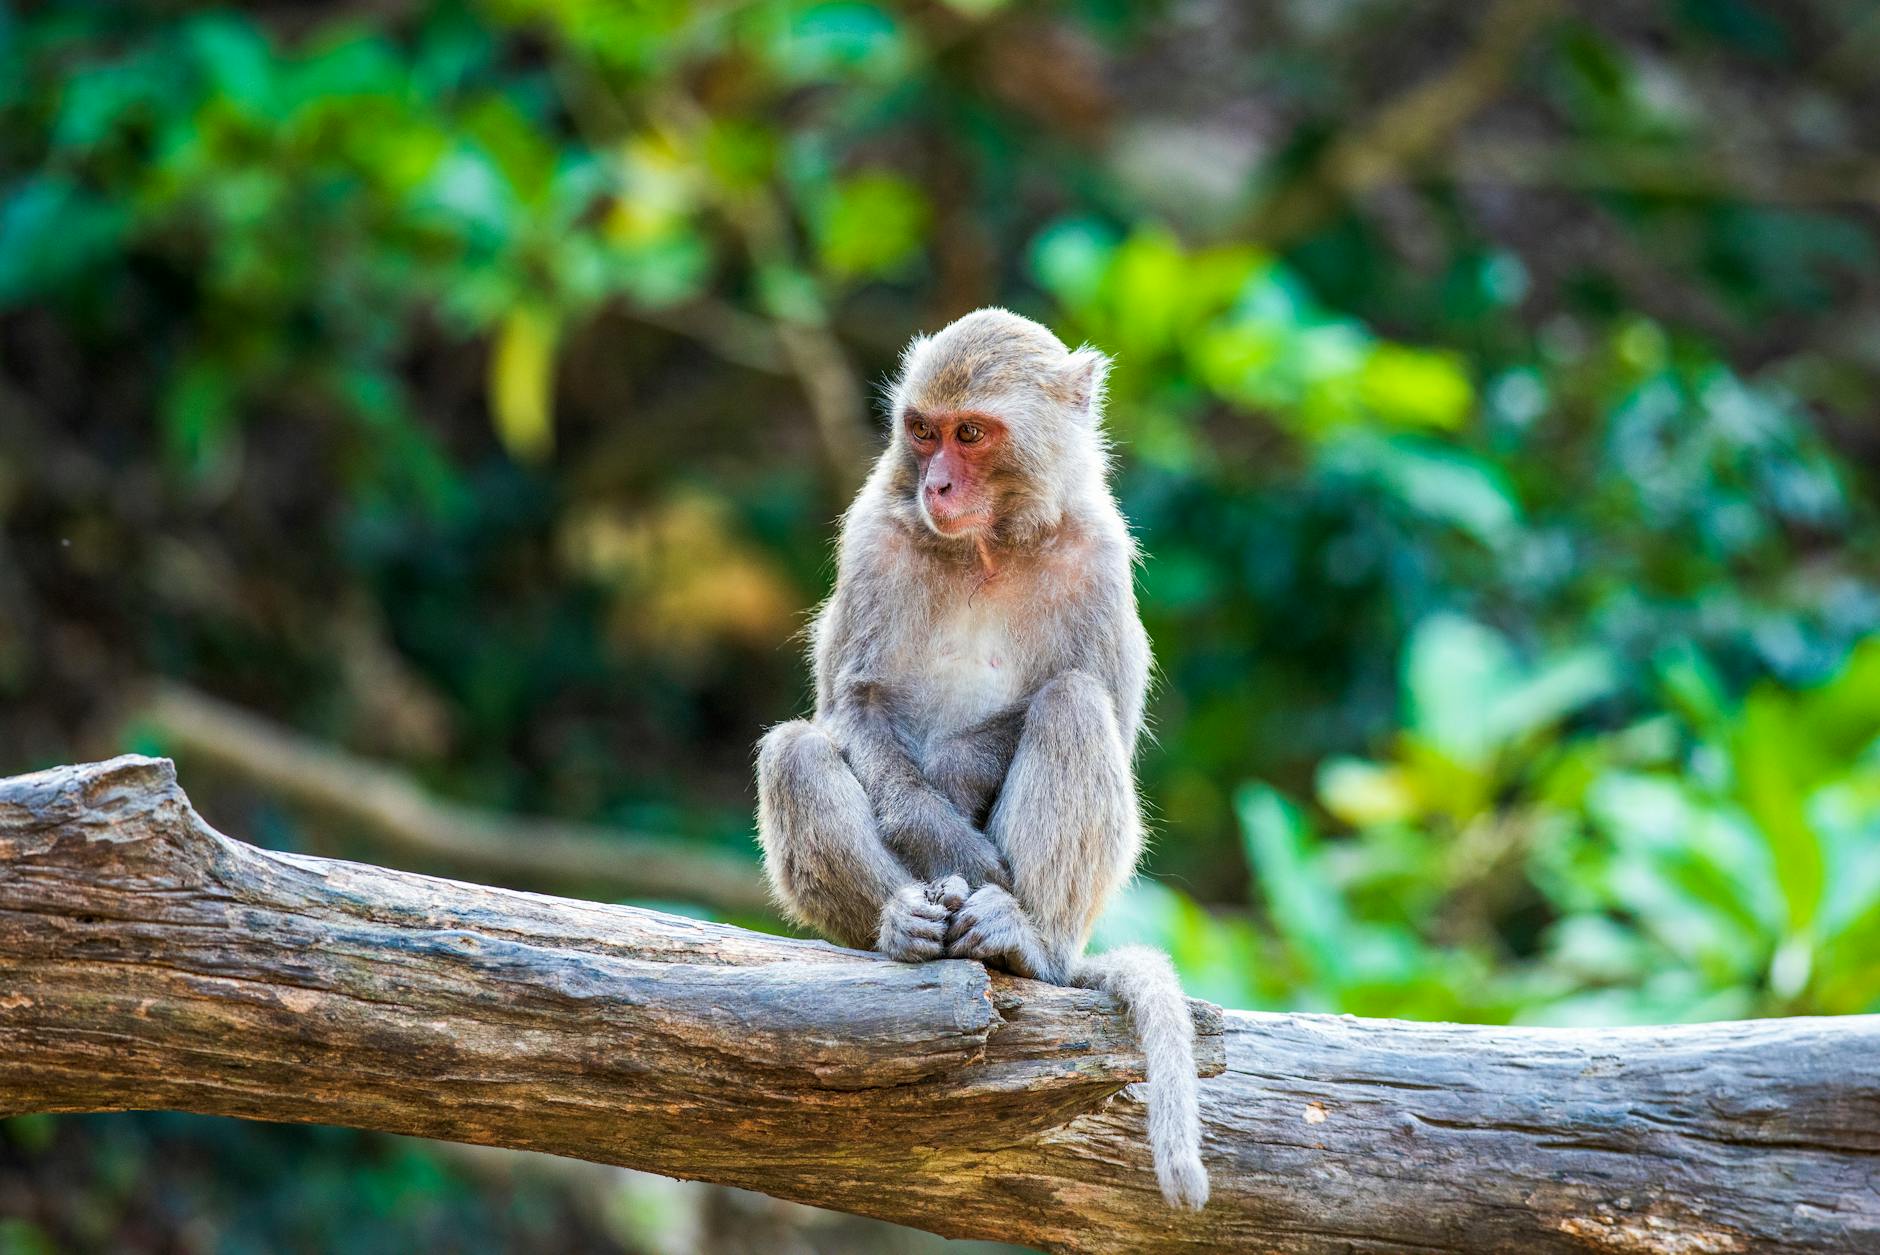 a monkey sitting on tree branch